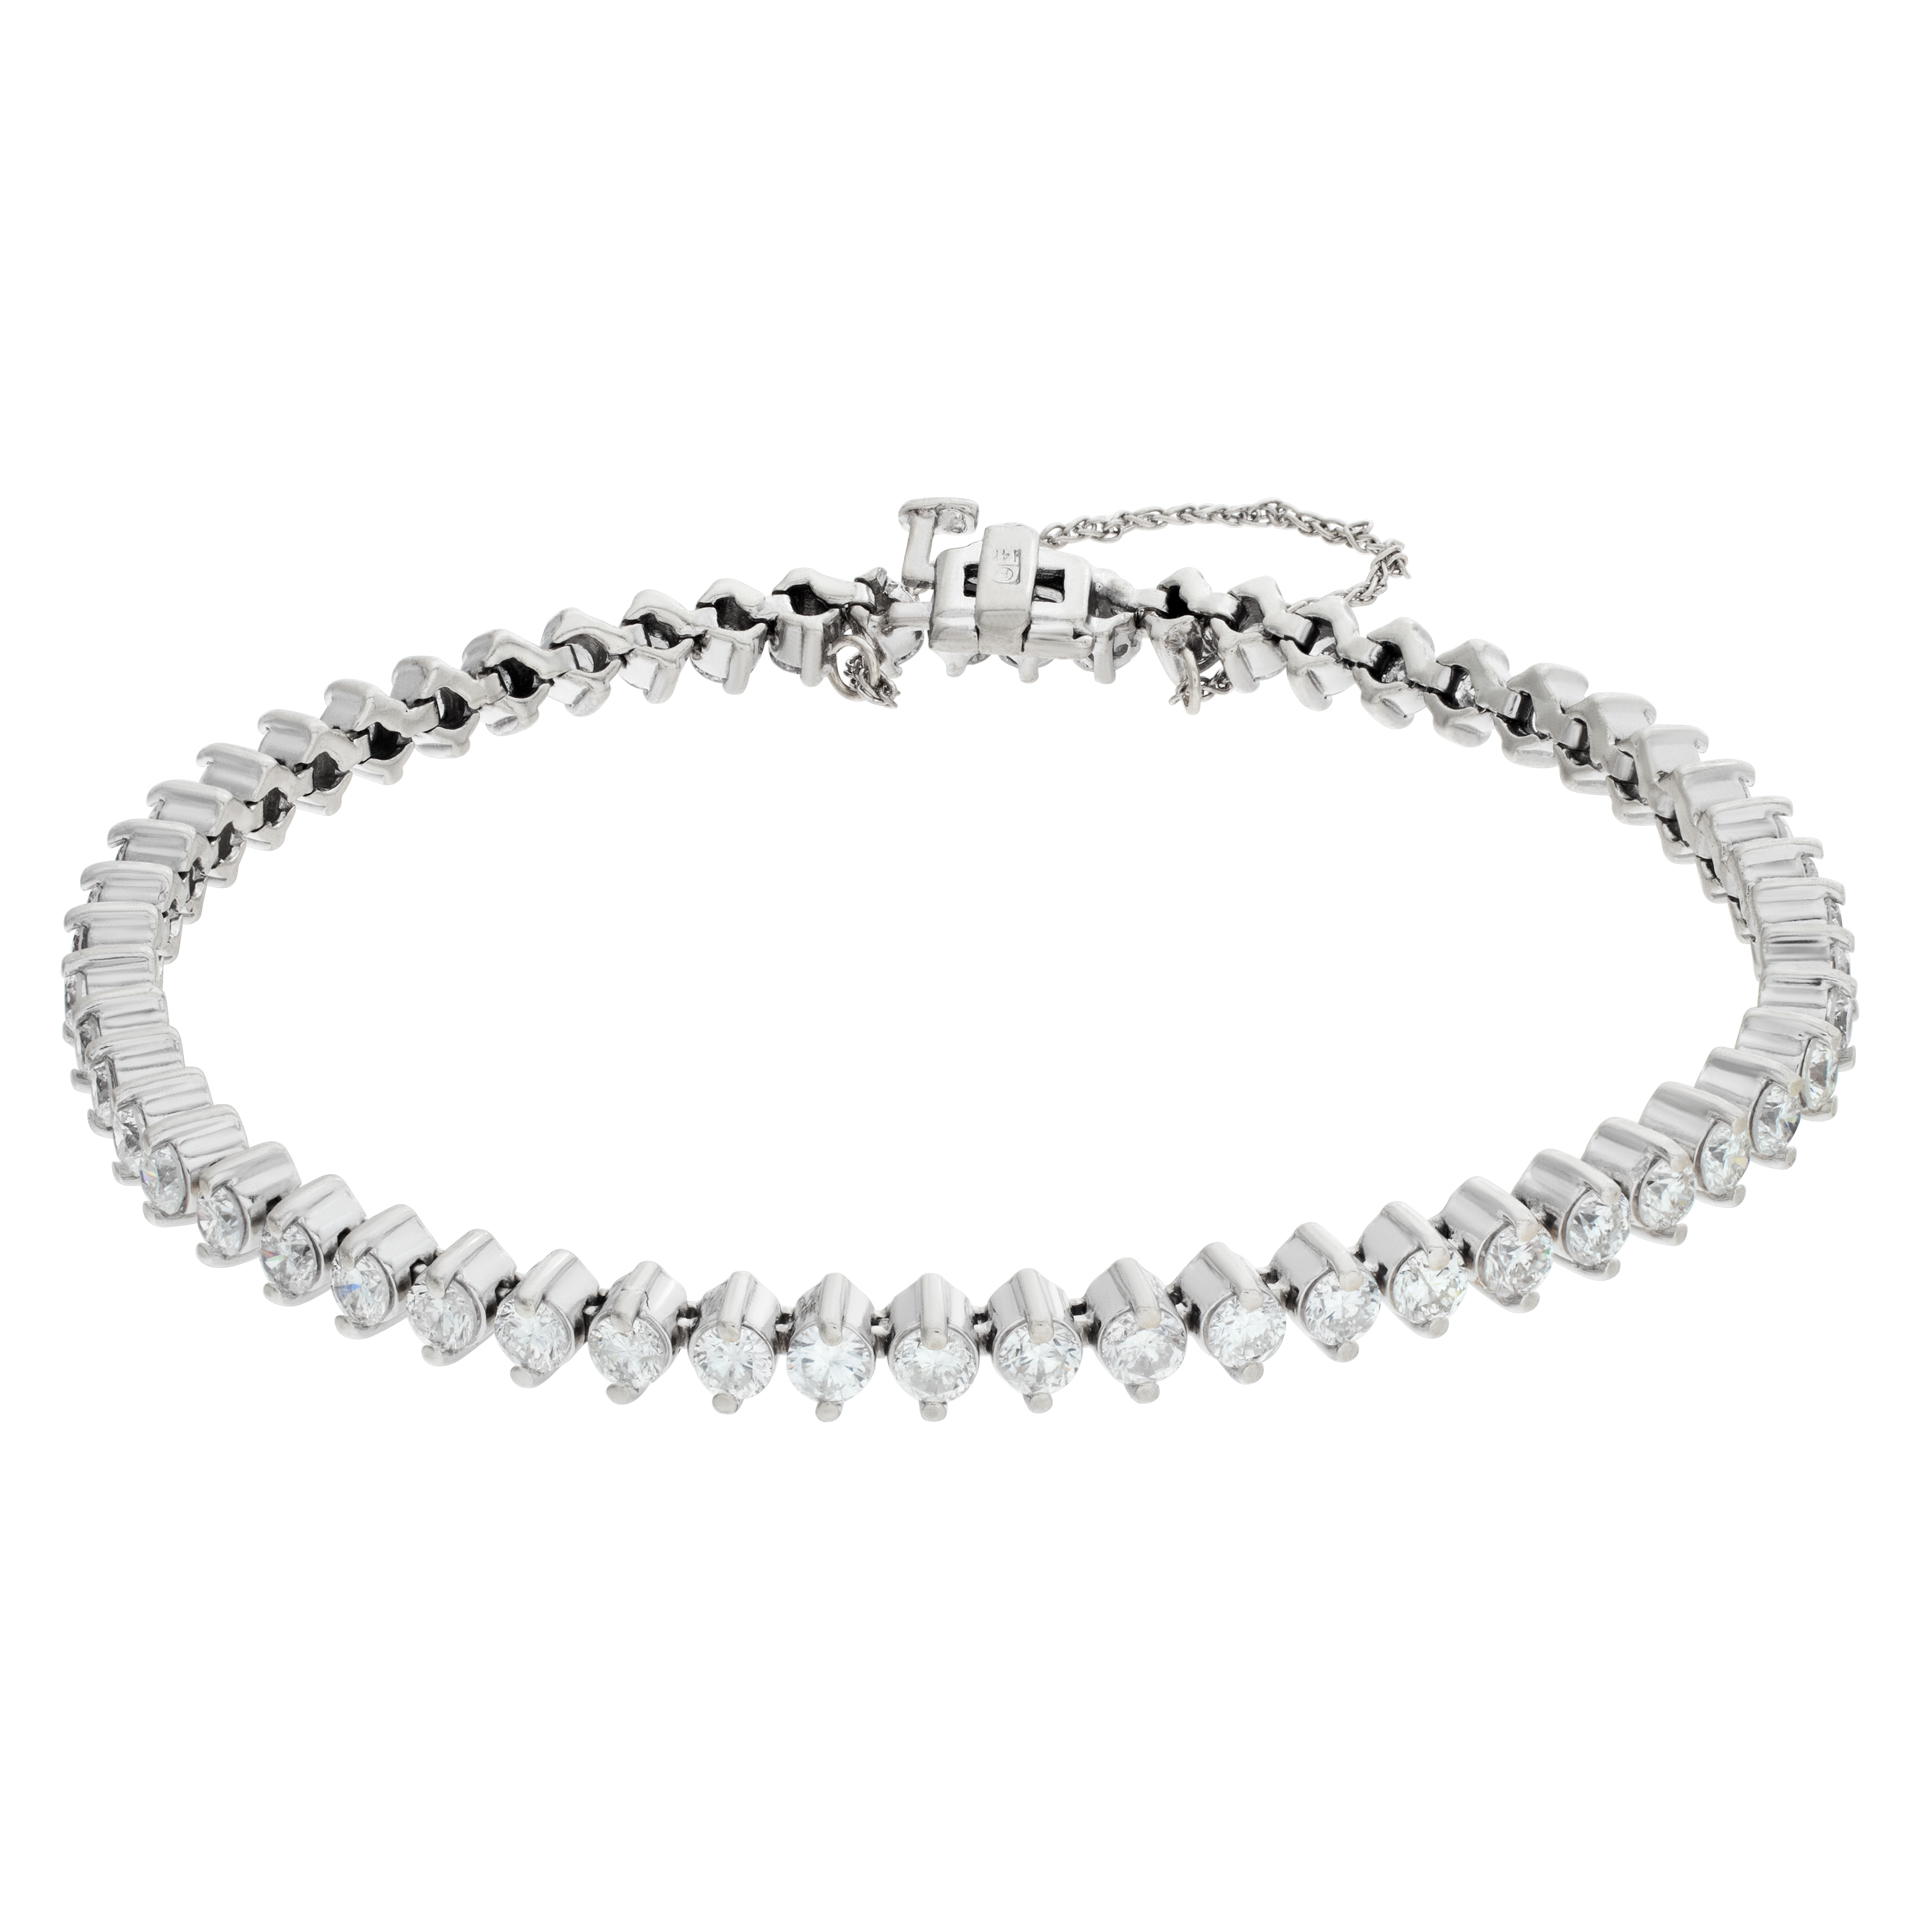 Diamonds line bracelet with approximately 5 carats round brilliant diamonds set in 14K white gold